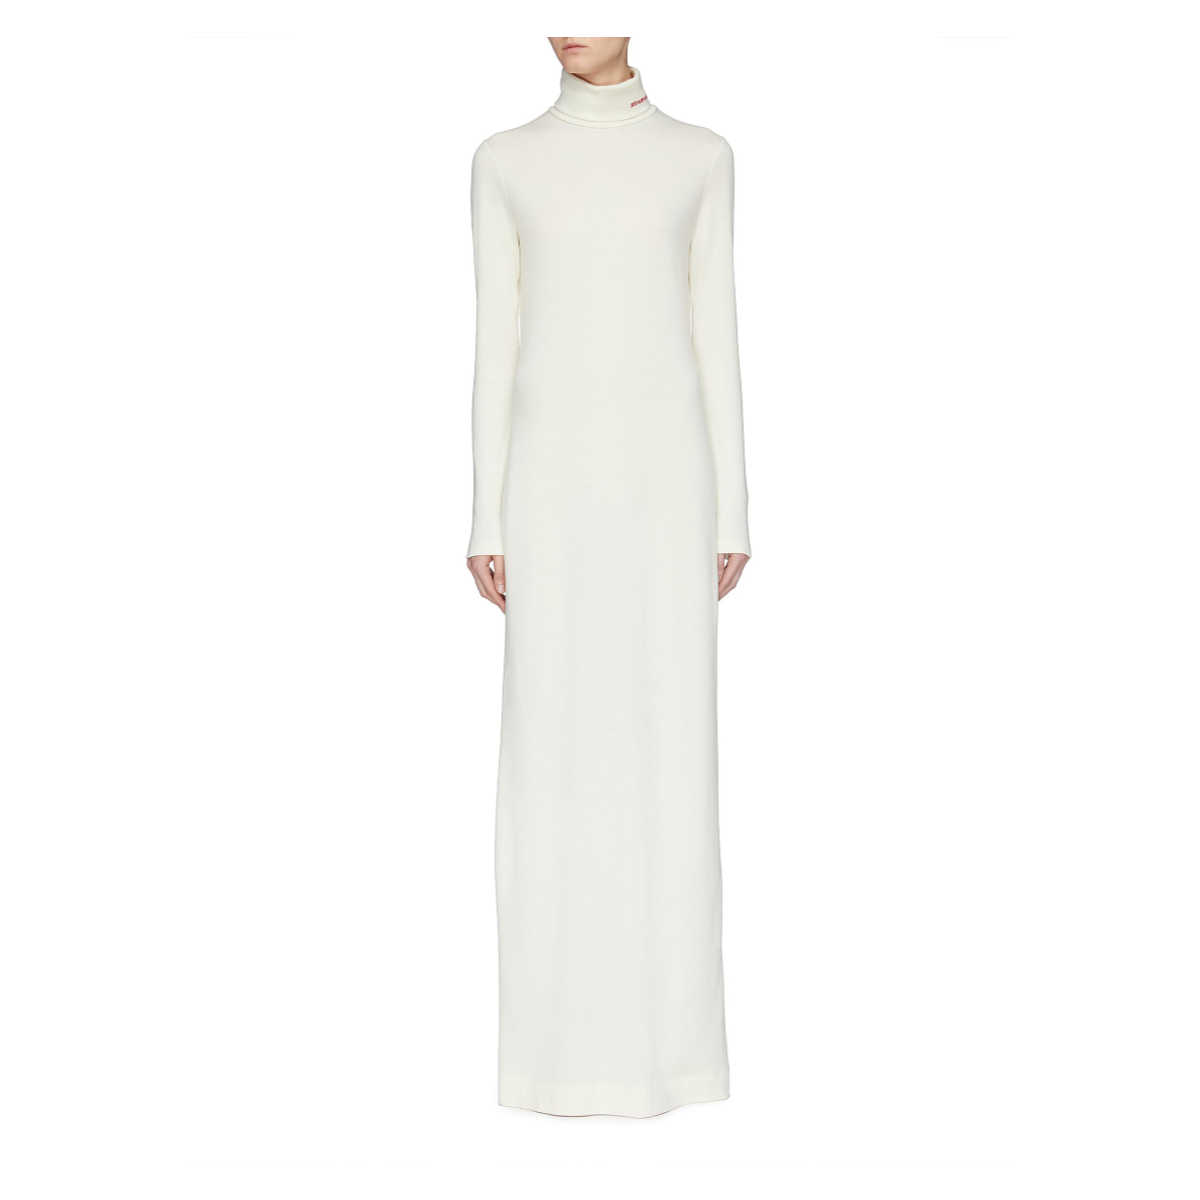 white lace sequin dress